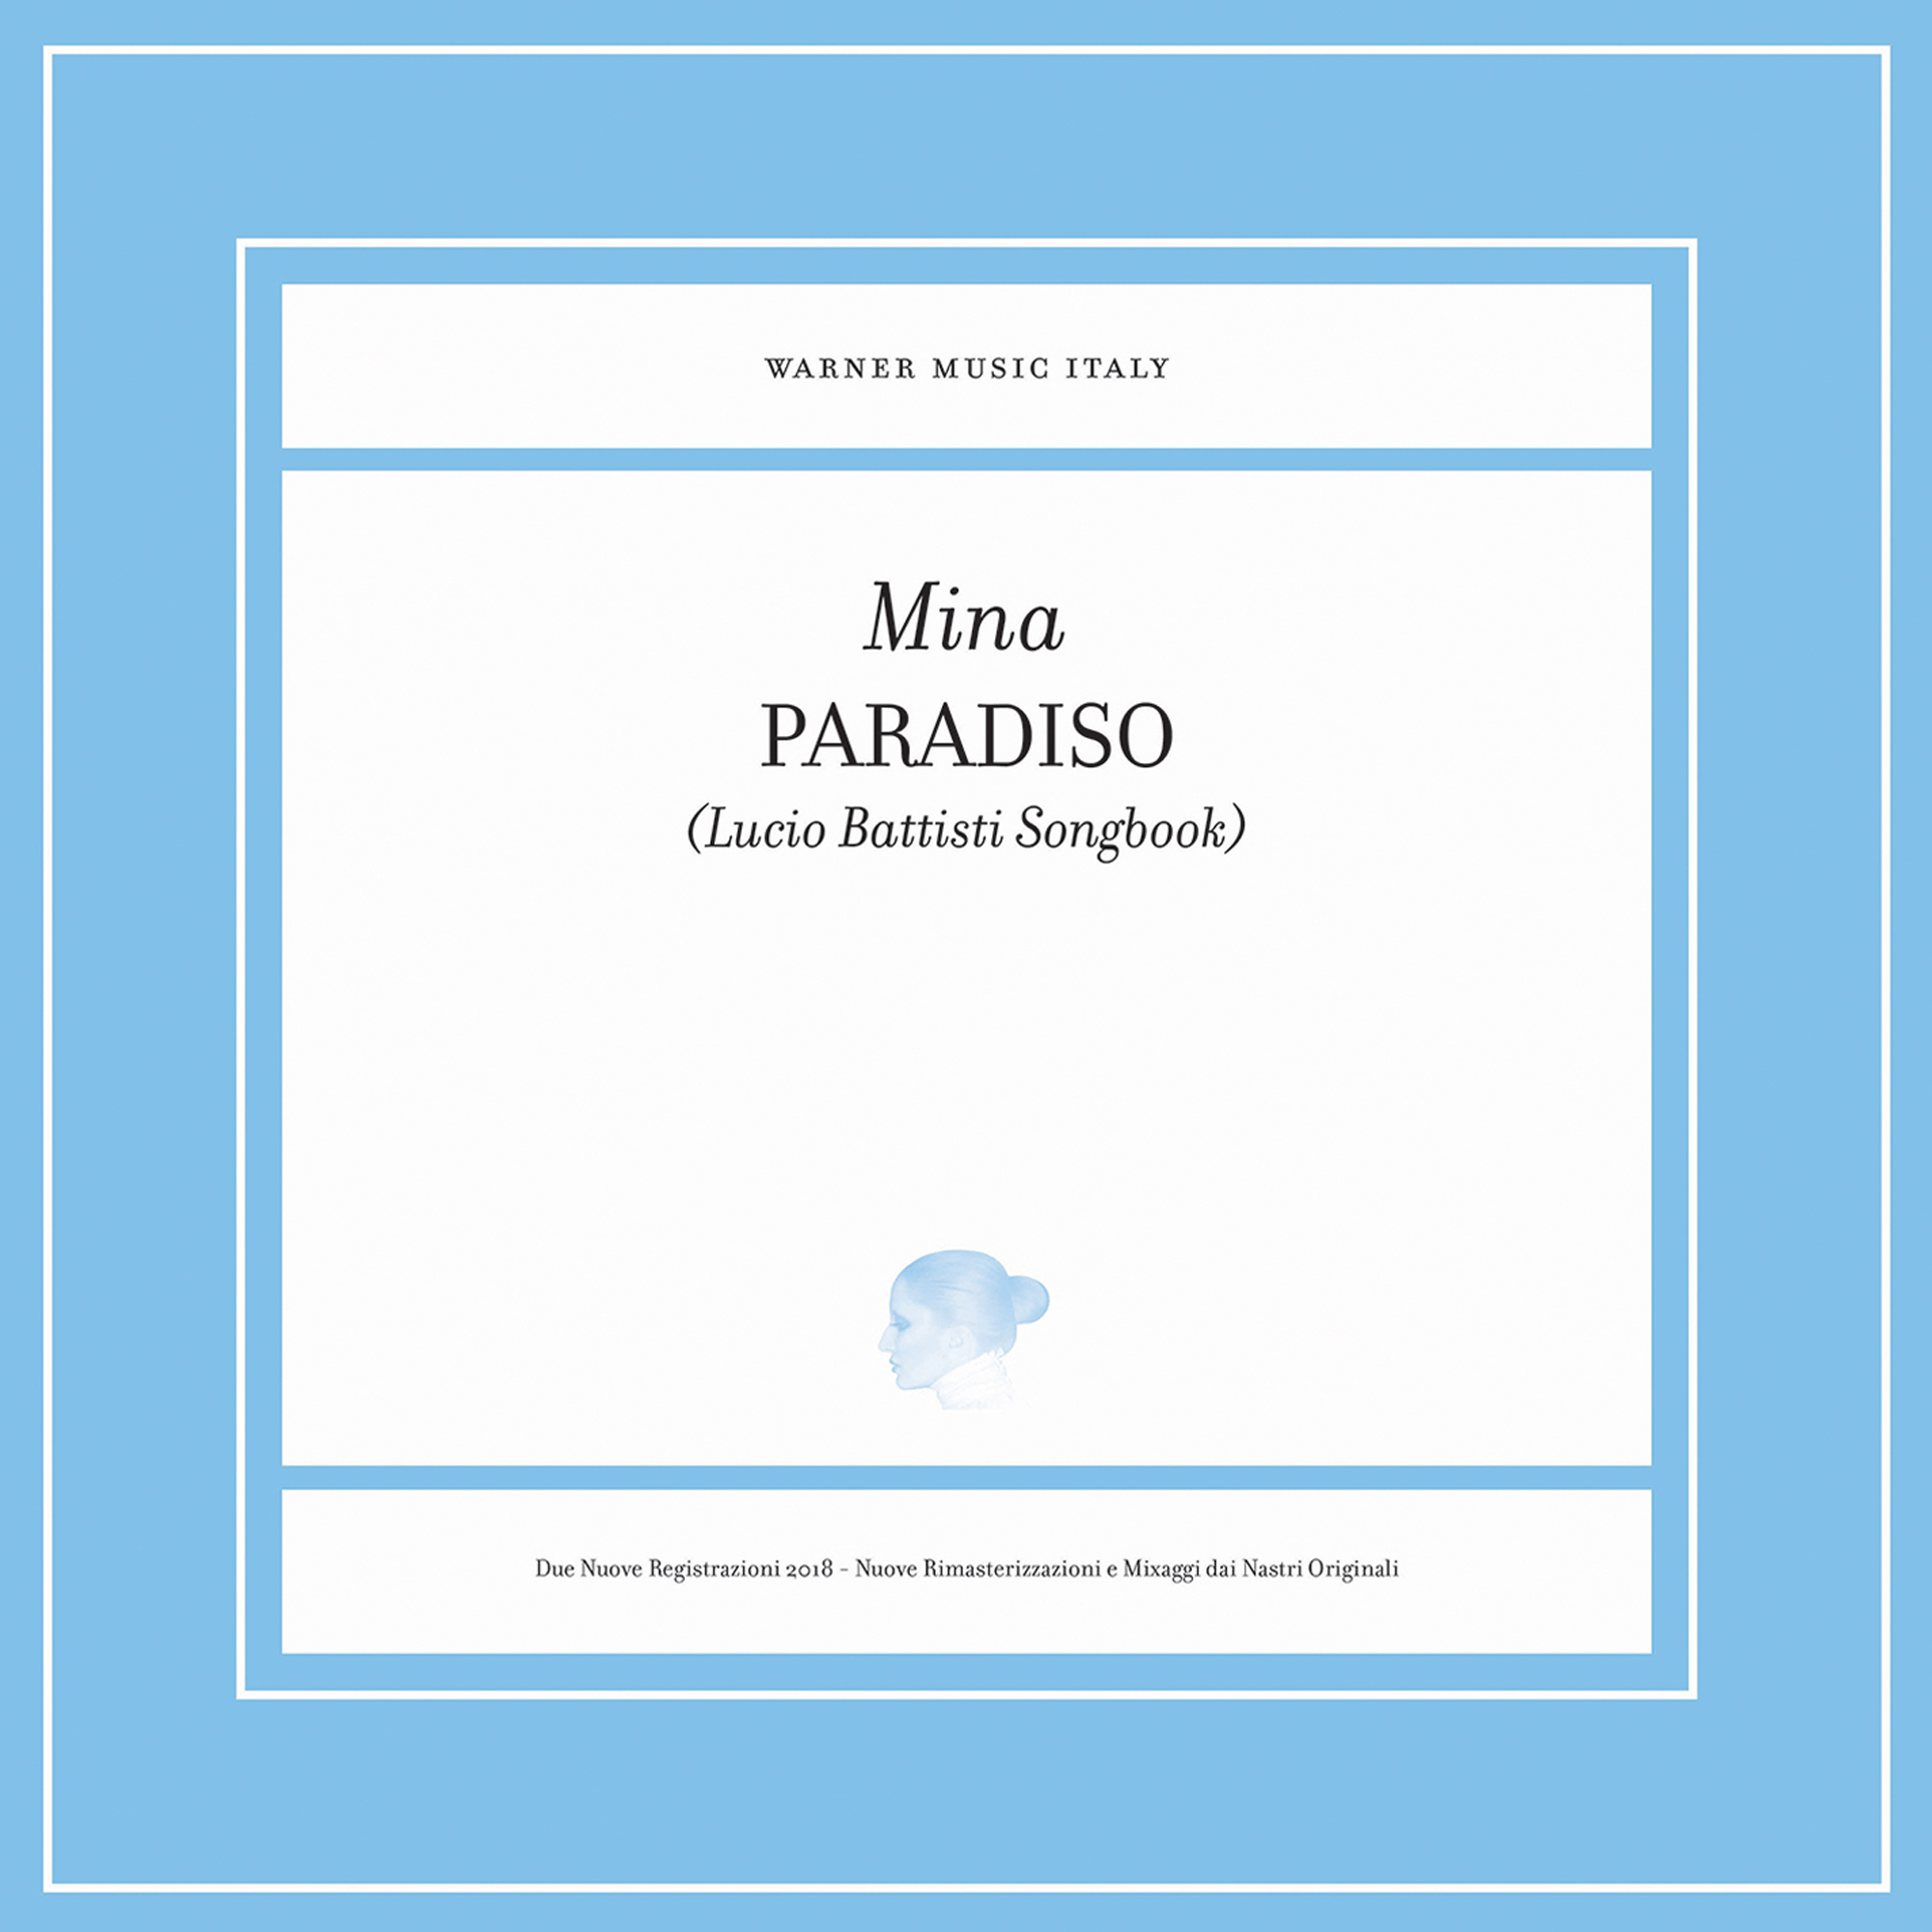 Mina - Paradiso - Lucio Battisti Songbook - Imagen 1 de 1